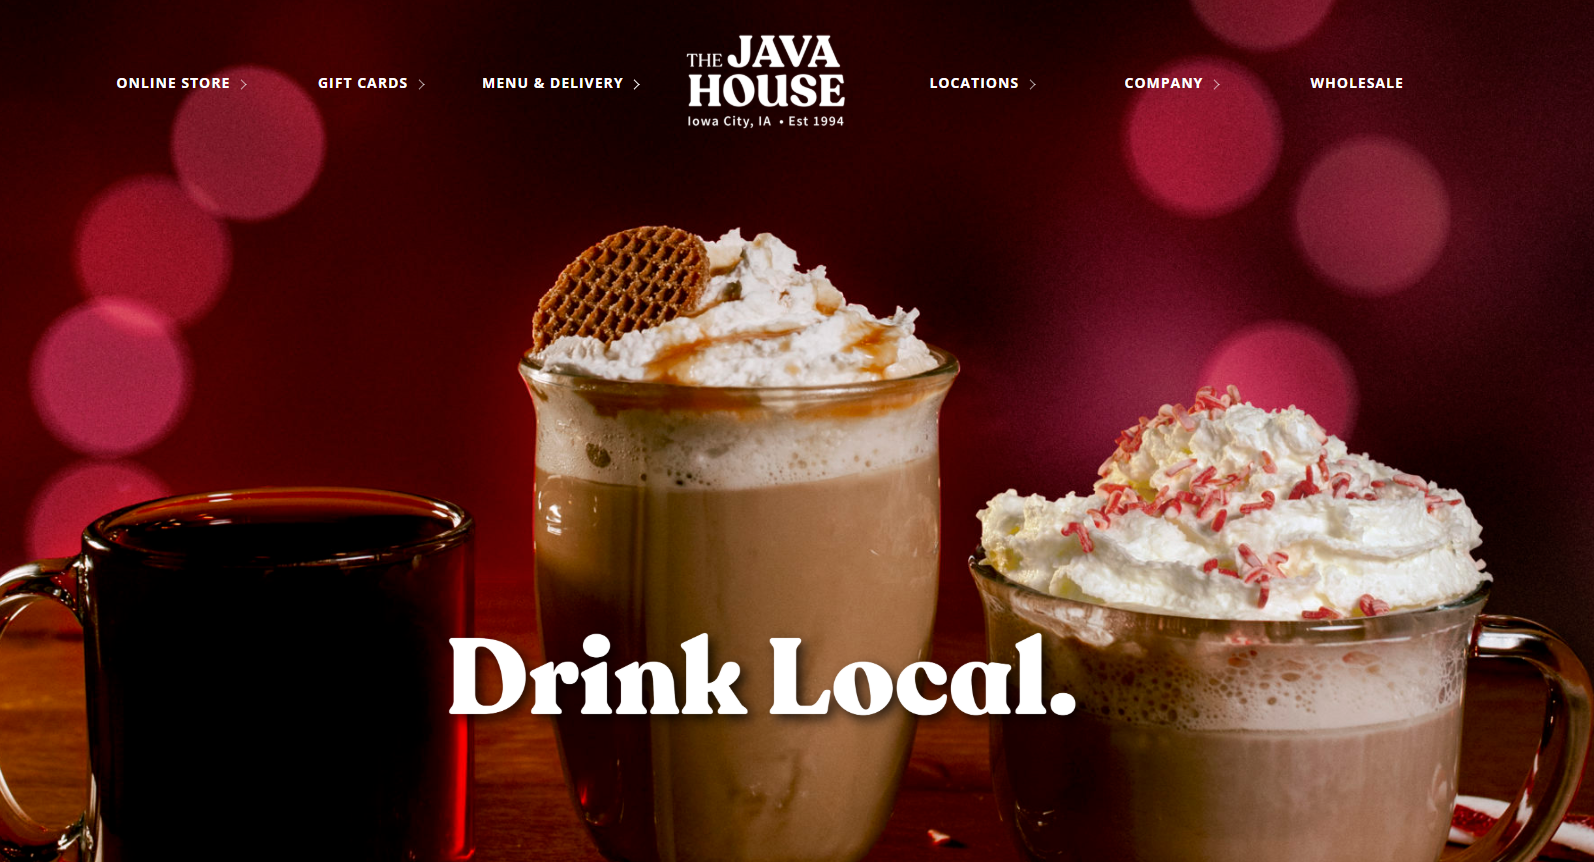 Java之家主页的截图